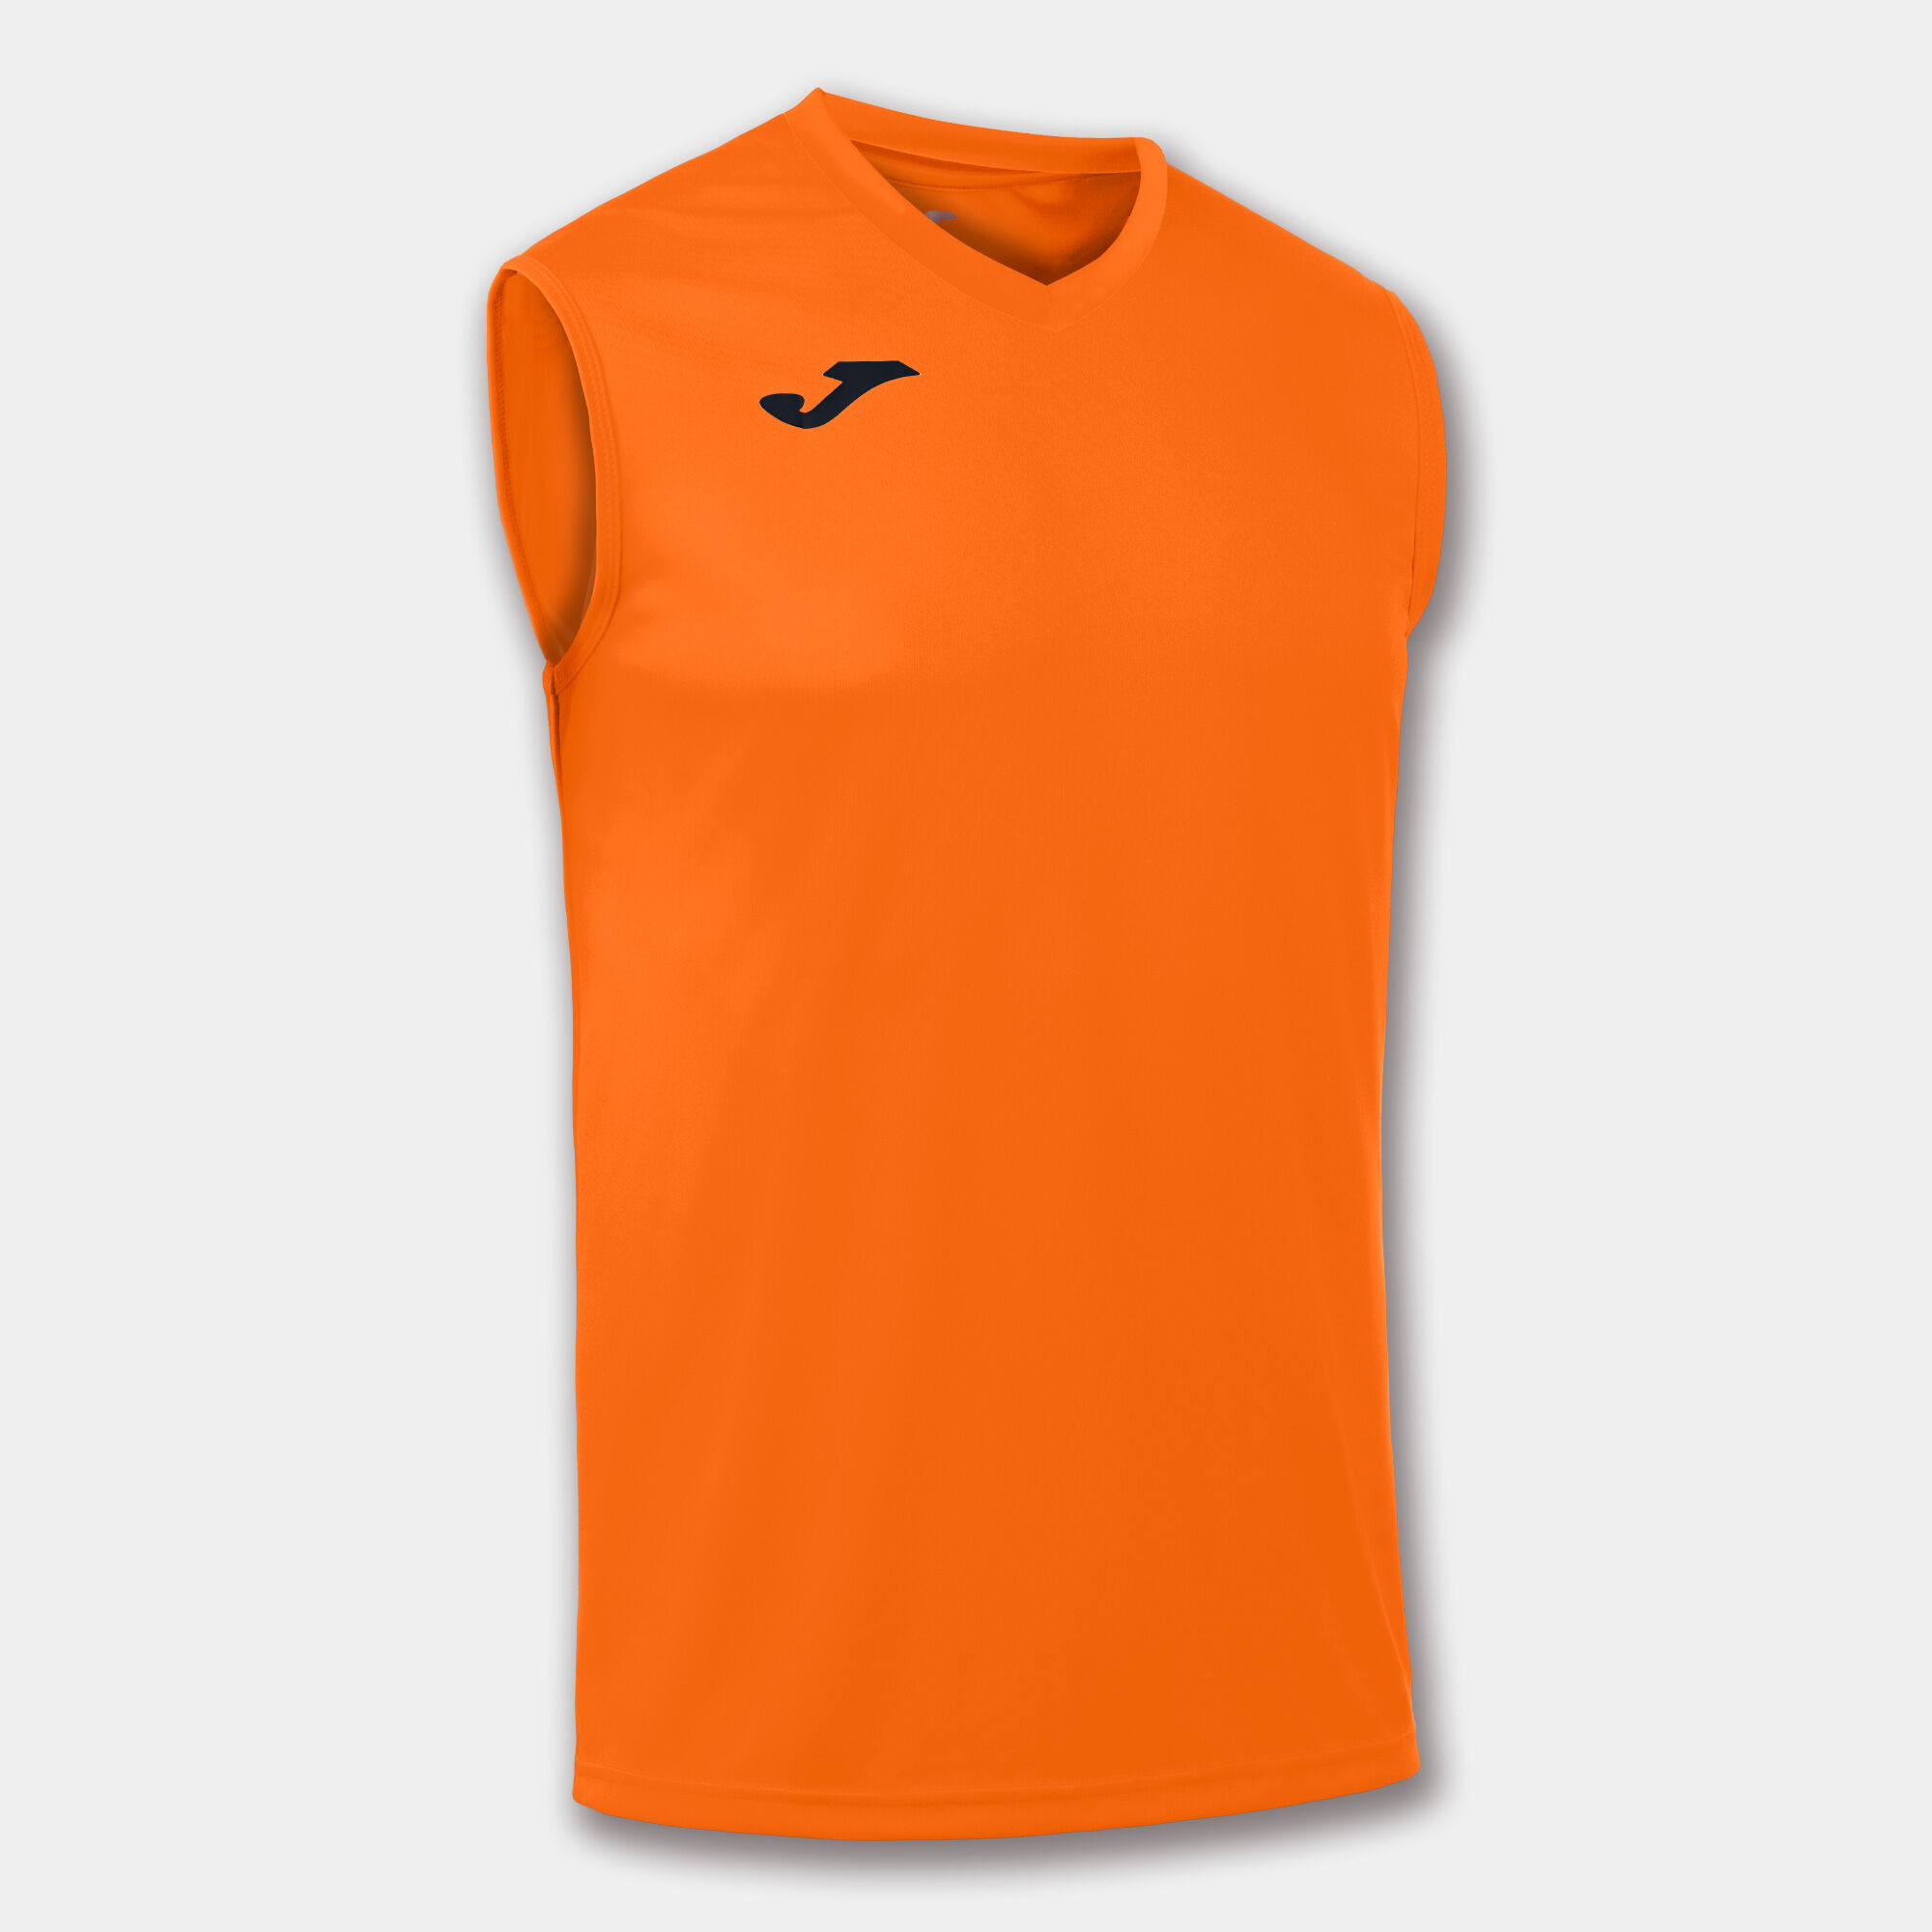 Camiseta sin mangas hombre Combi naranja